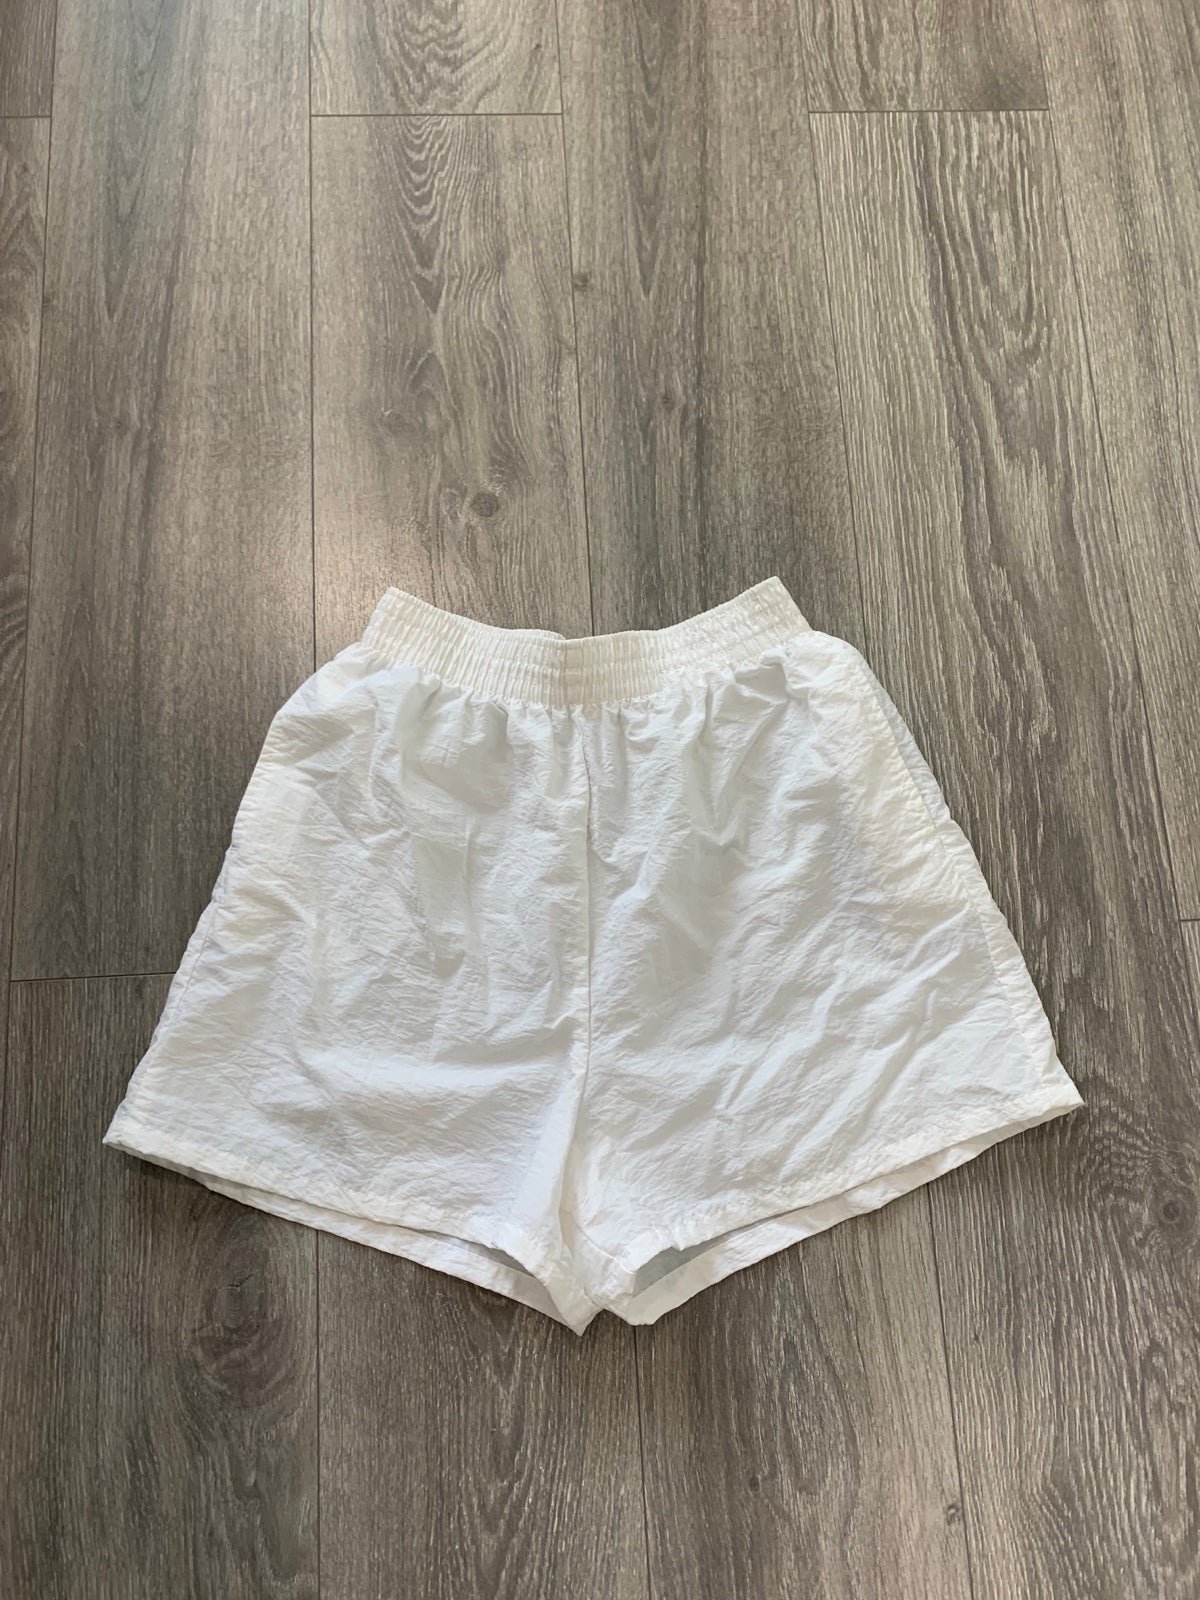 Personality Women’s Vintage White Shorts MFQwCepEg hot sale